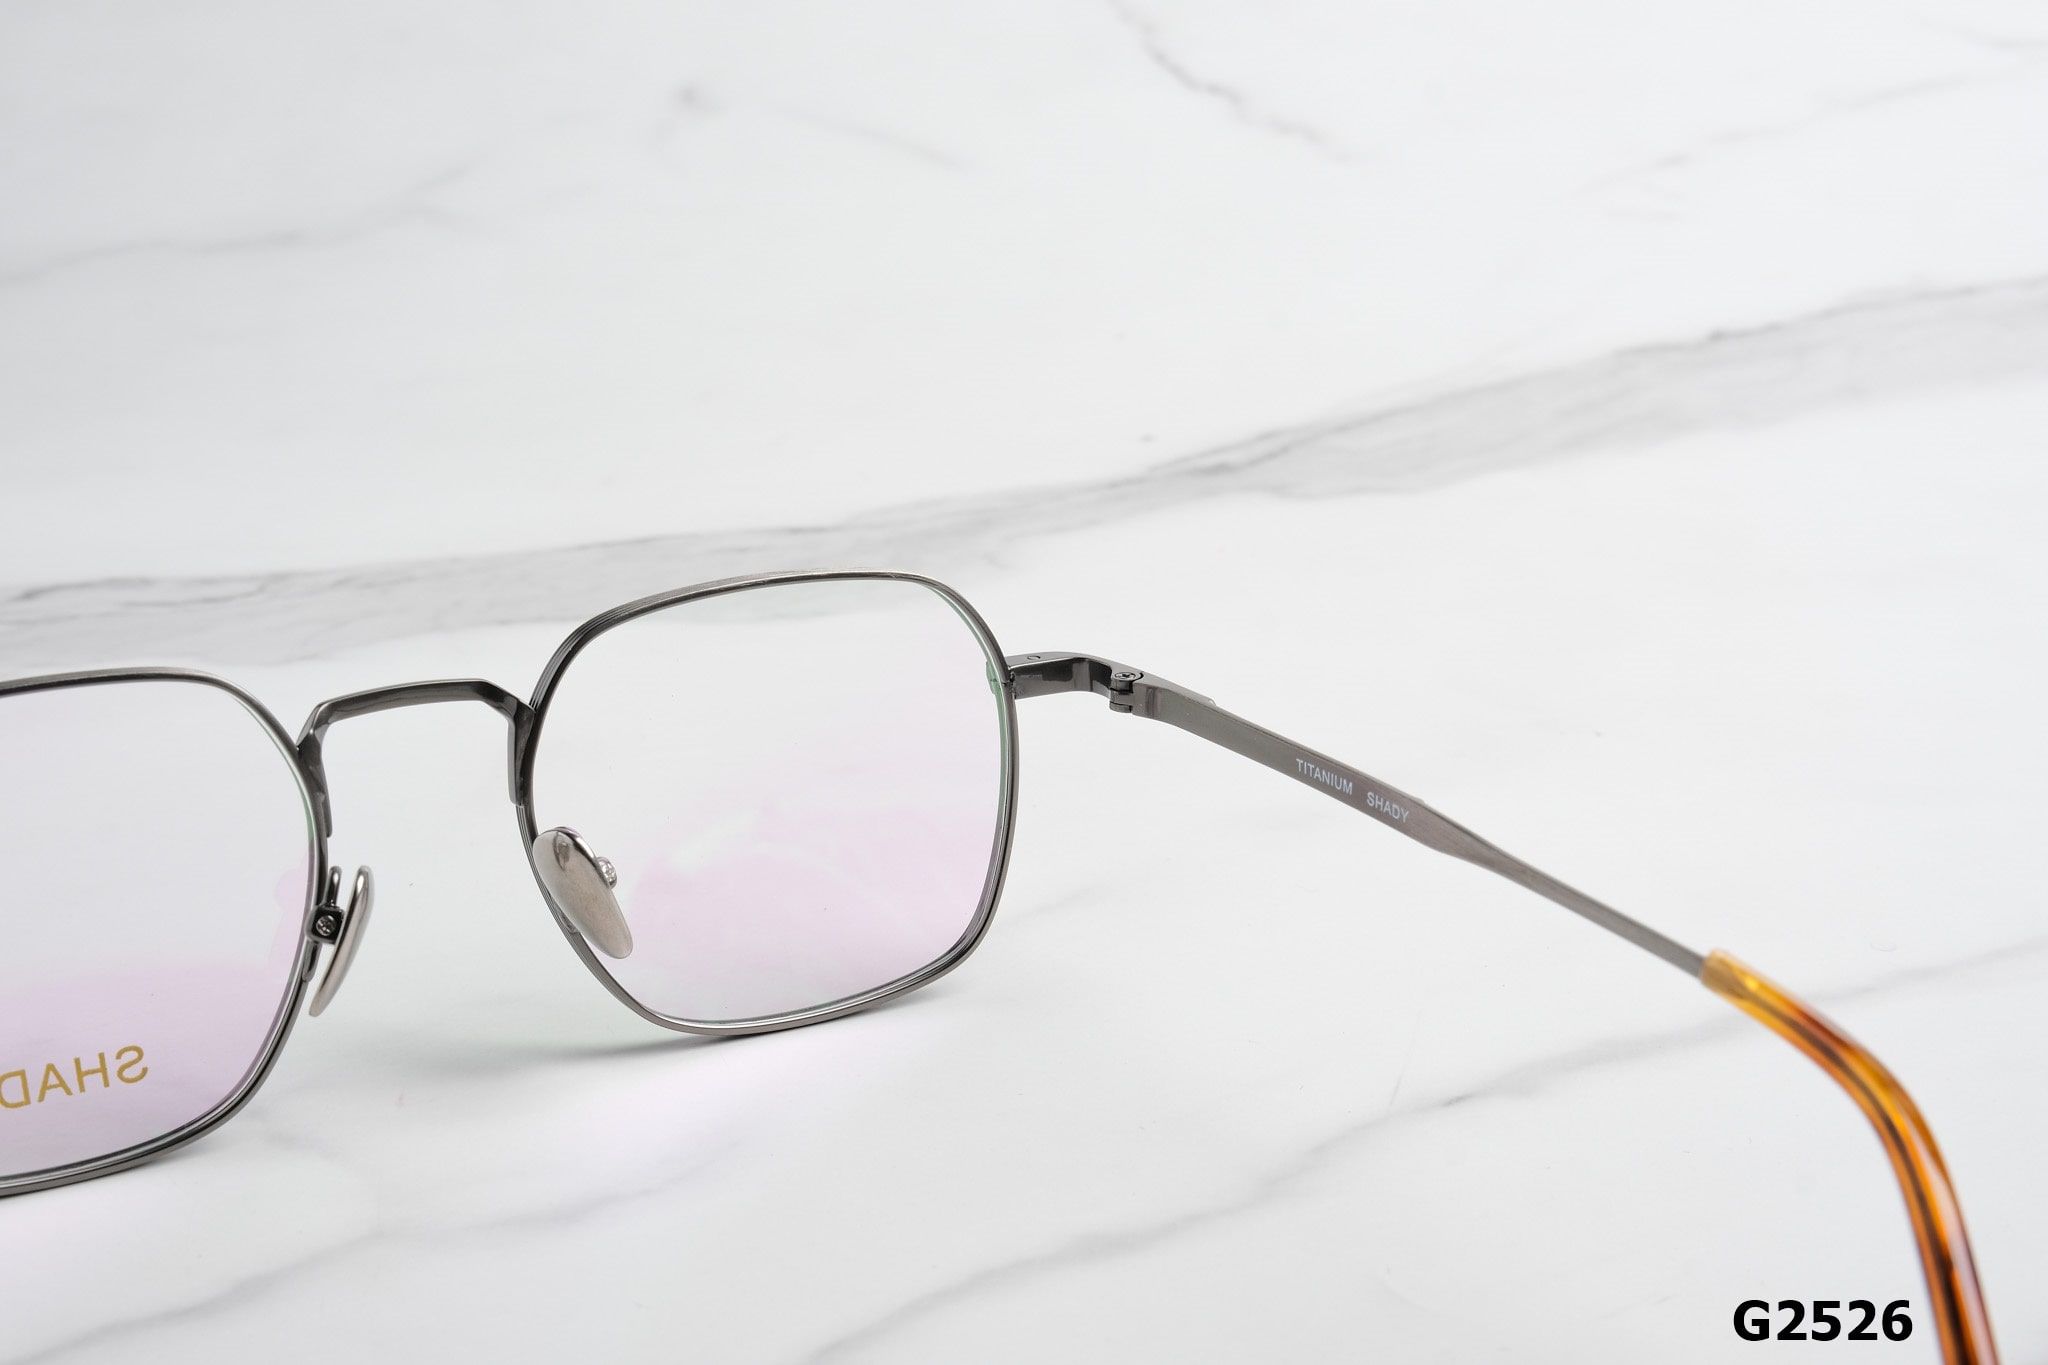  SHADY Eyewear - Glasses - G2526 